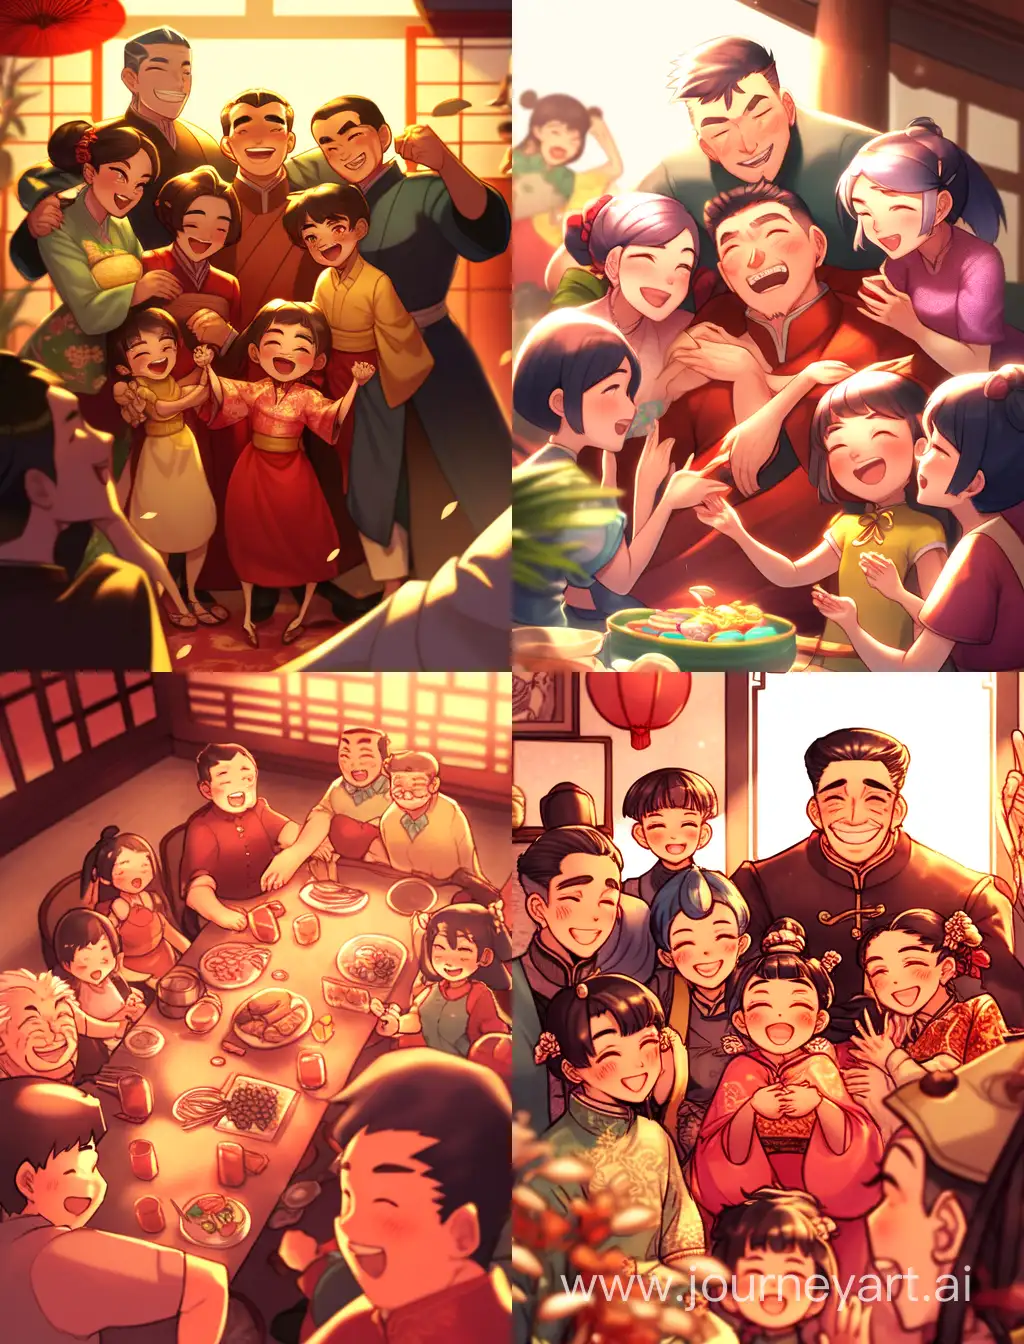 Joyful-Chinese-Family-Reunion-in-Warm-Tones